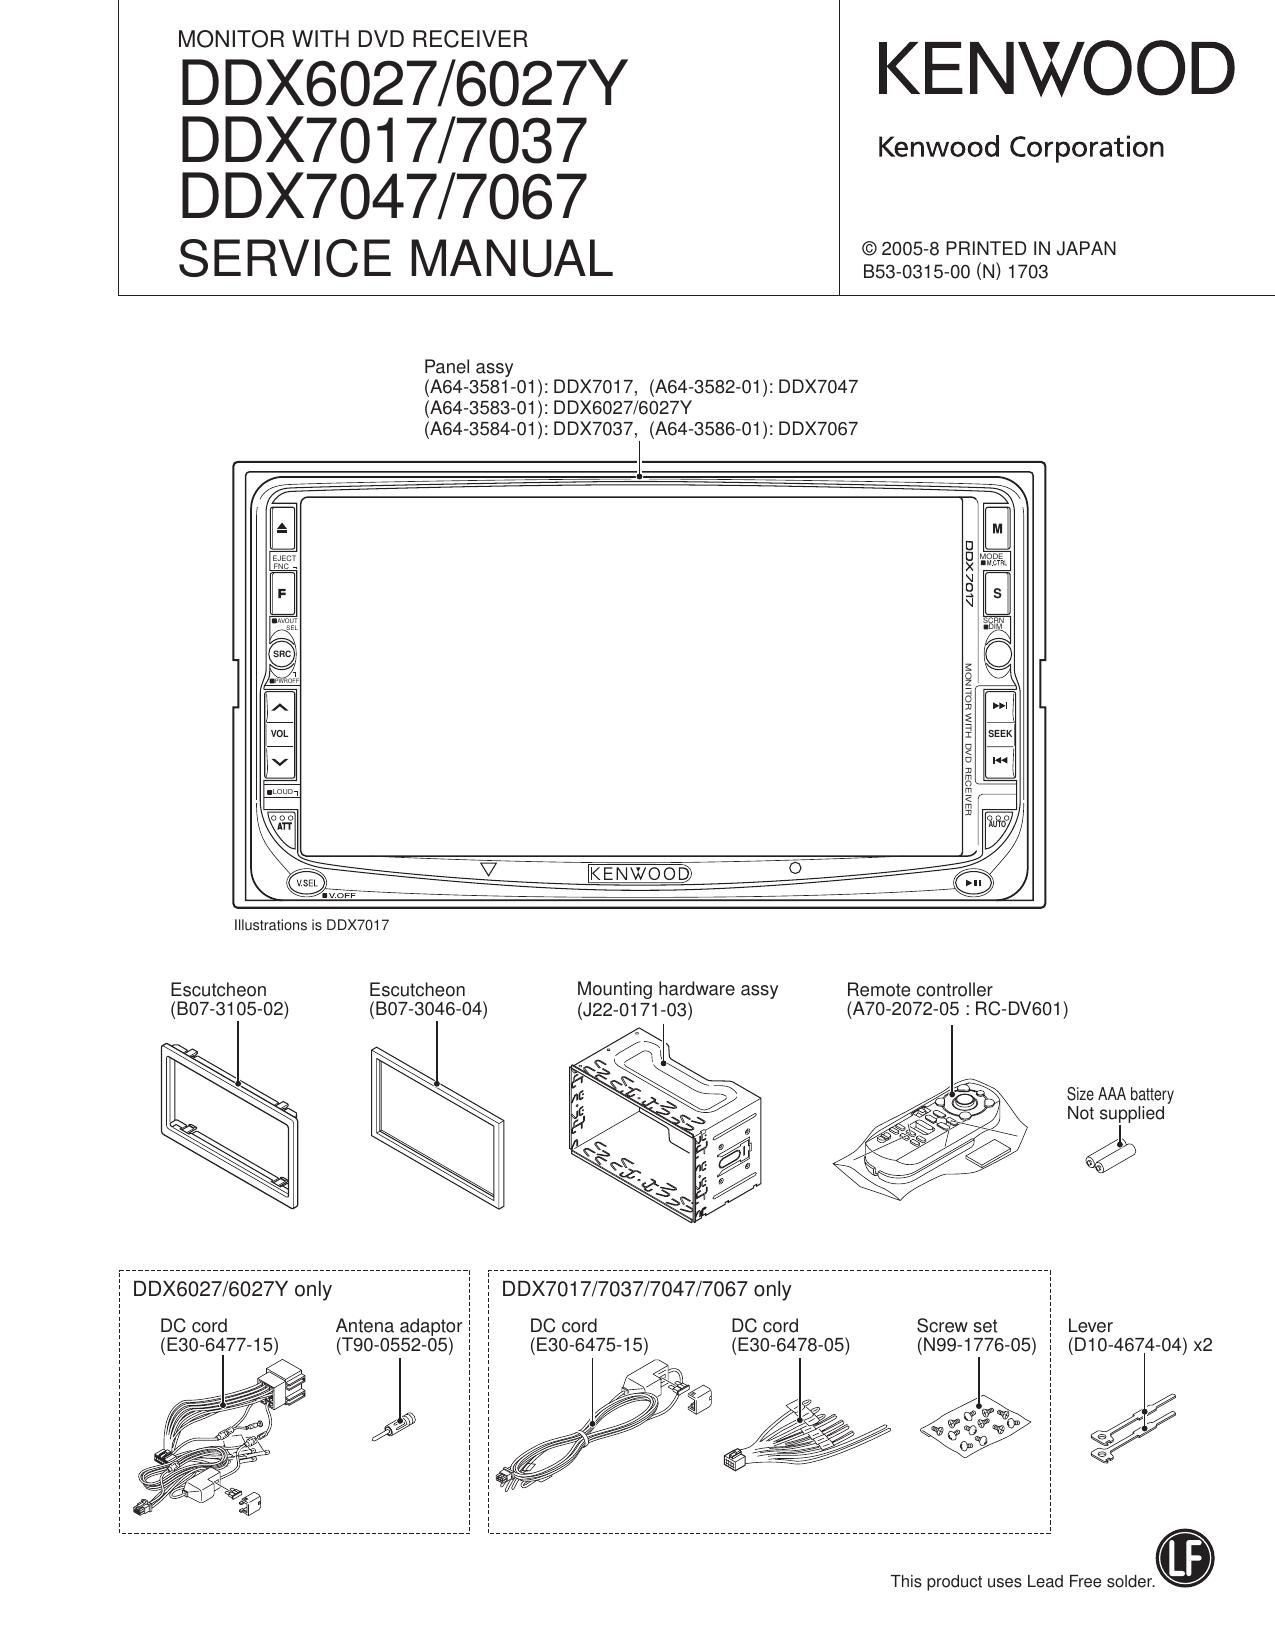 Kenwood DDX 7017 HU Service Manual